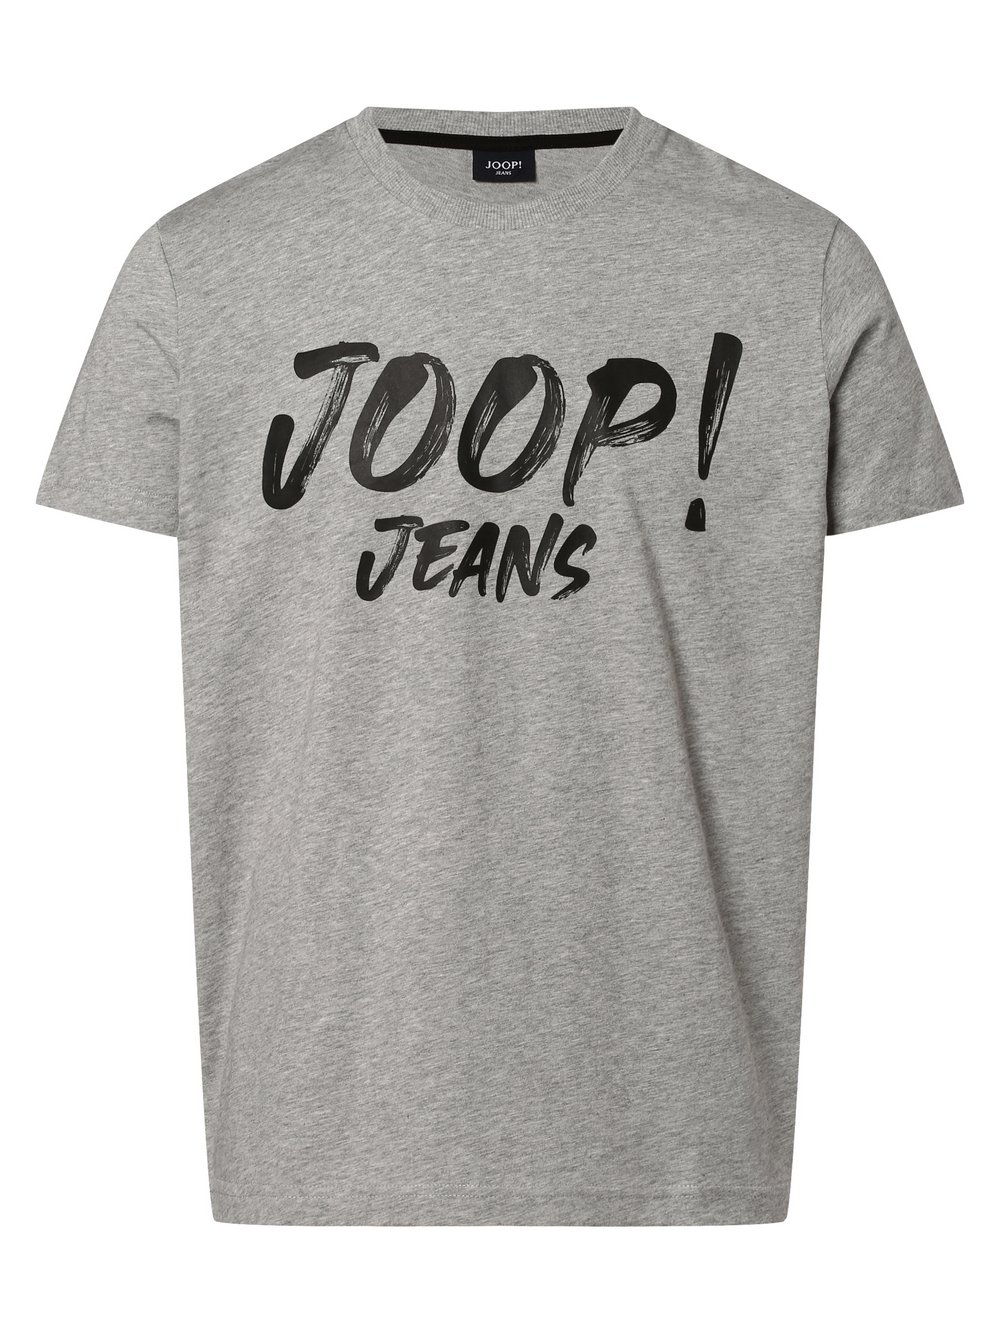 Joop Jeans - T-shirt męski – Adamo, szary